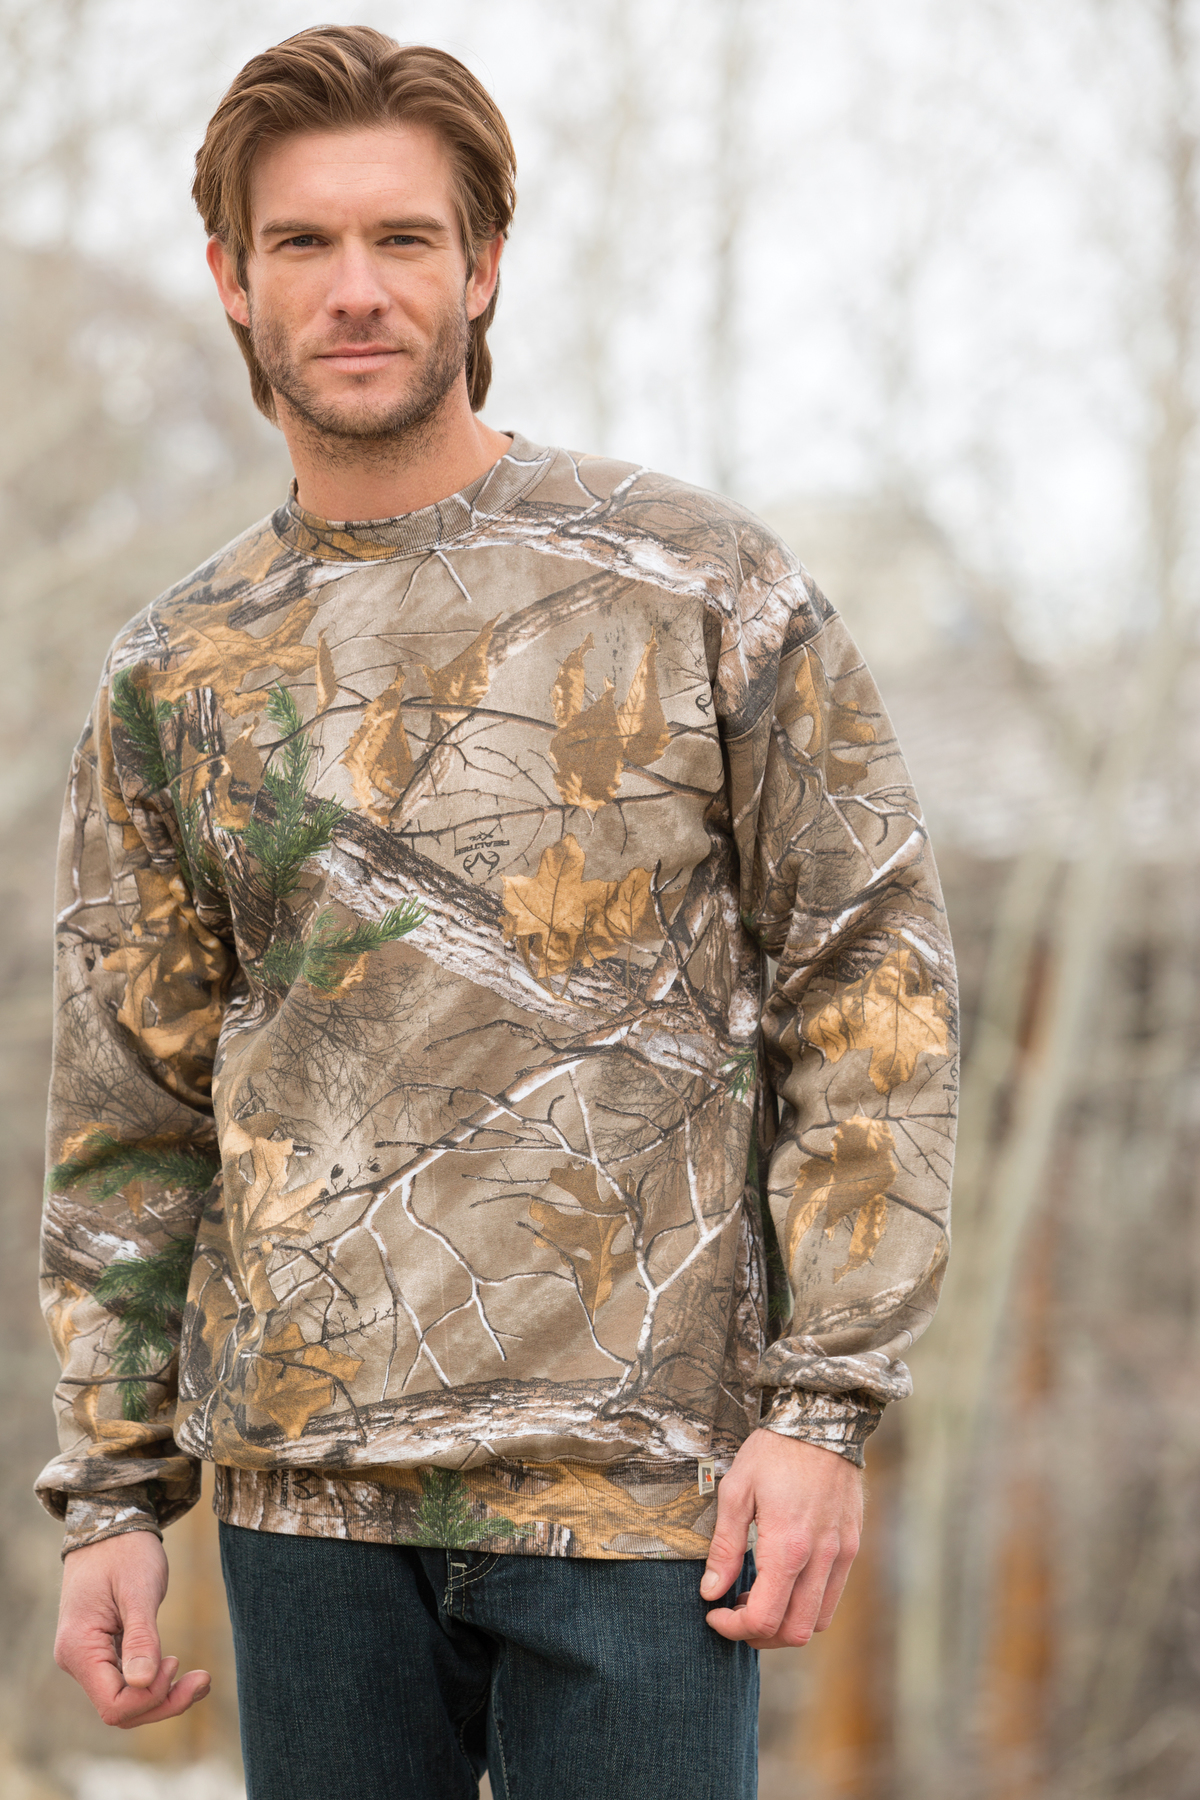 XL Russell Outdoors Camo Sweatshirt REALTREE XTRA or AP Crewneck  Hunting  L